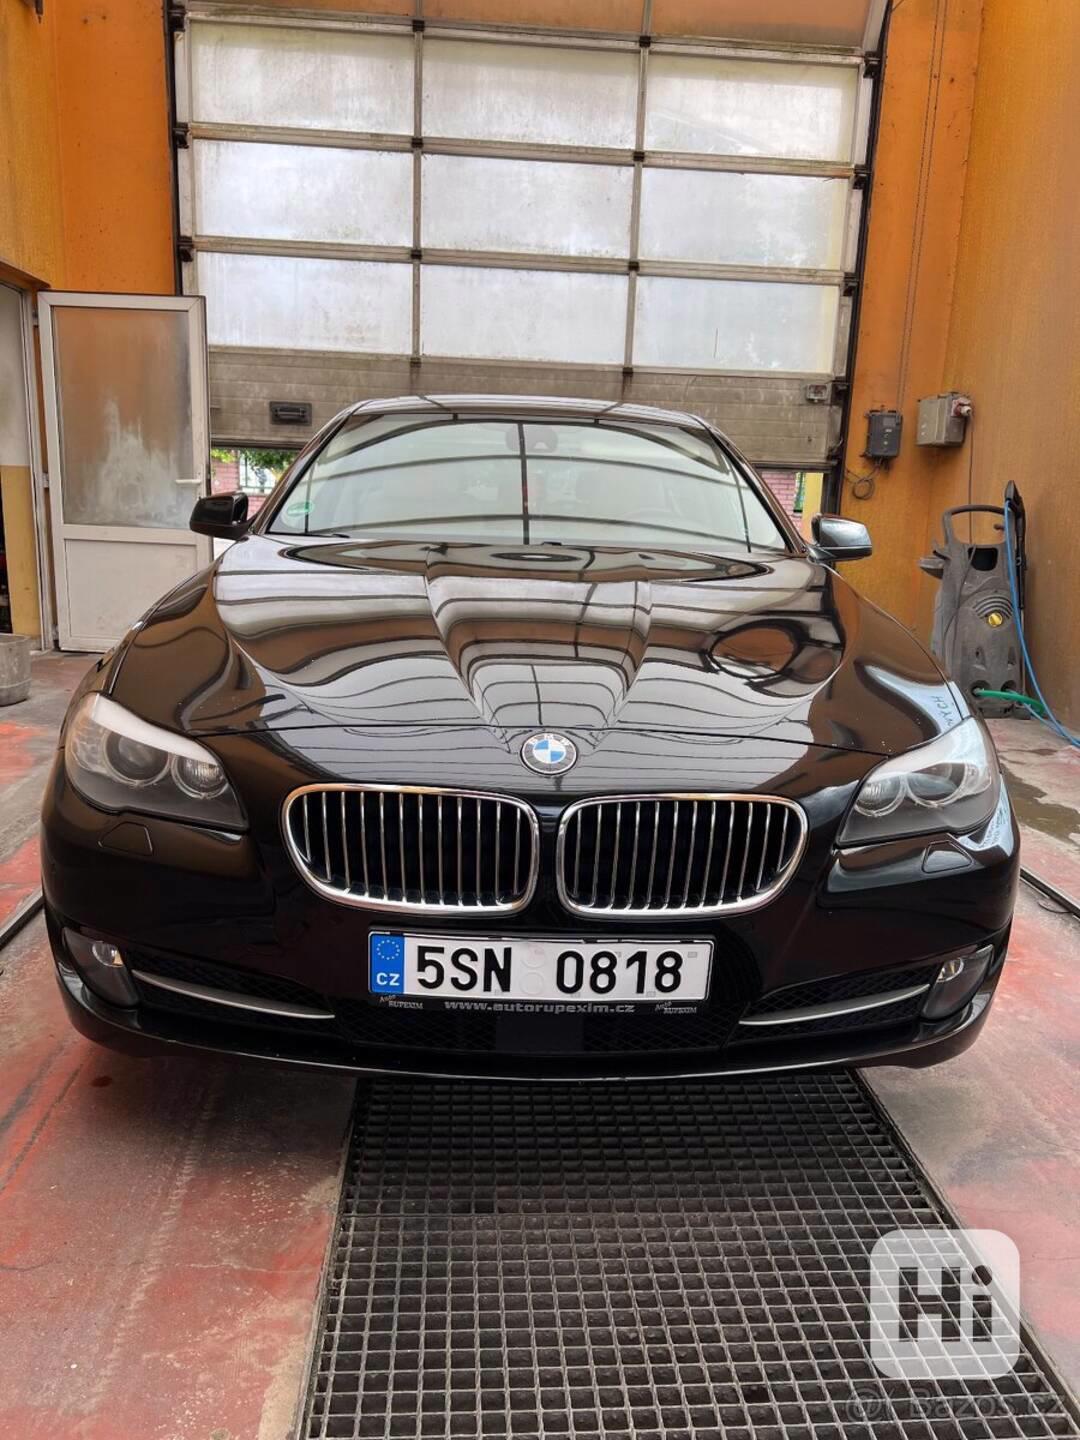 BMW F10 528i 3,0 190KW - foto 1